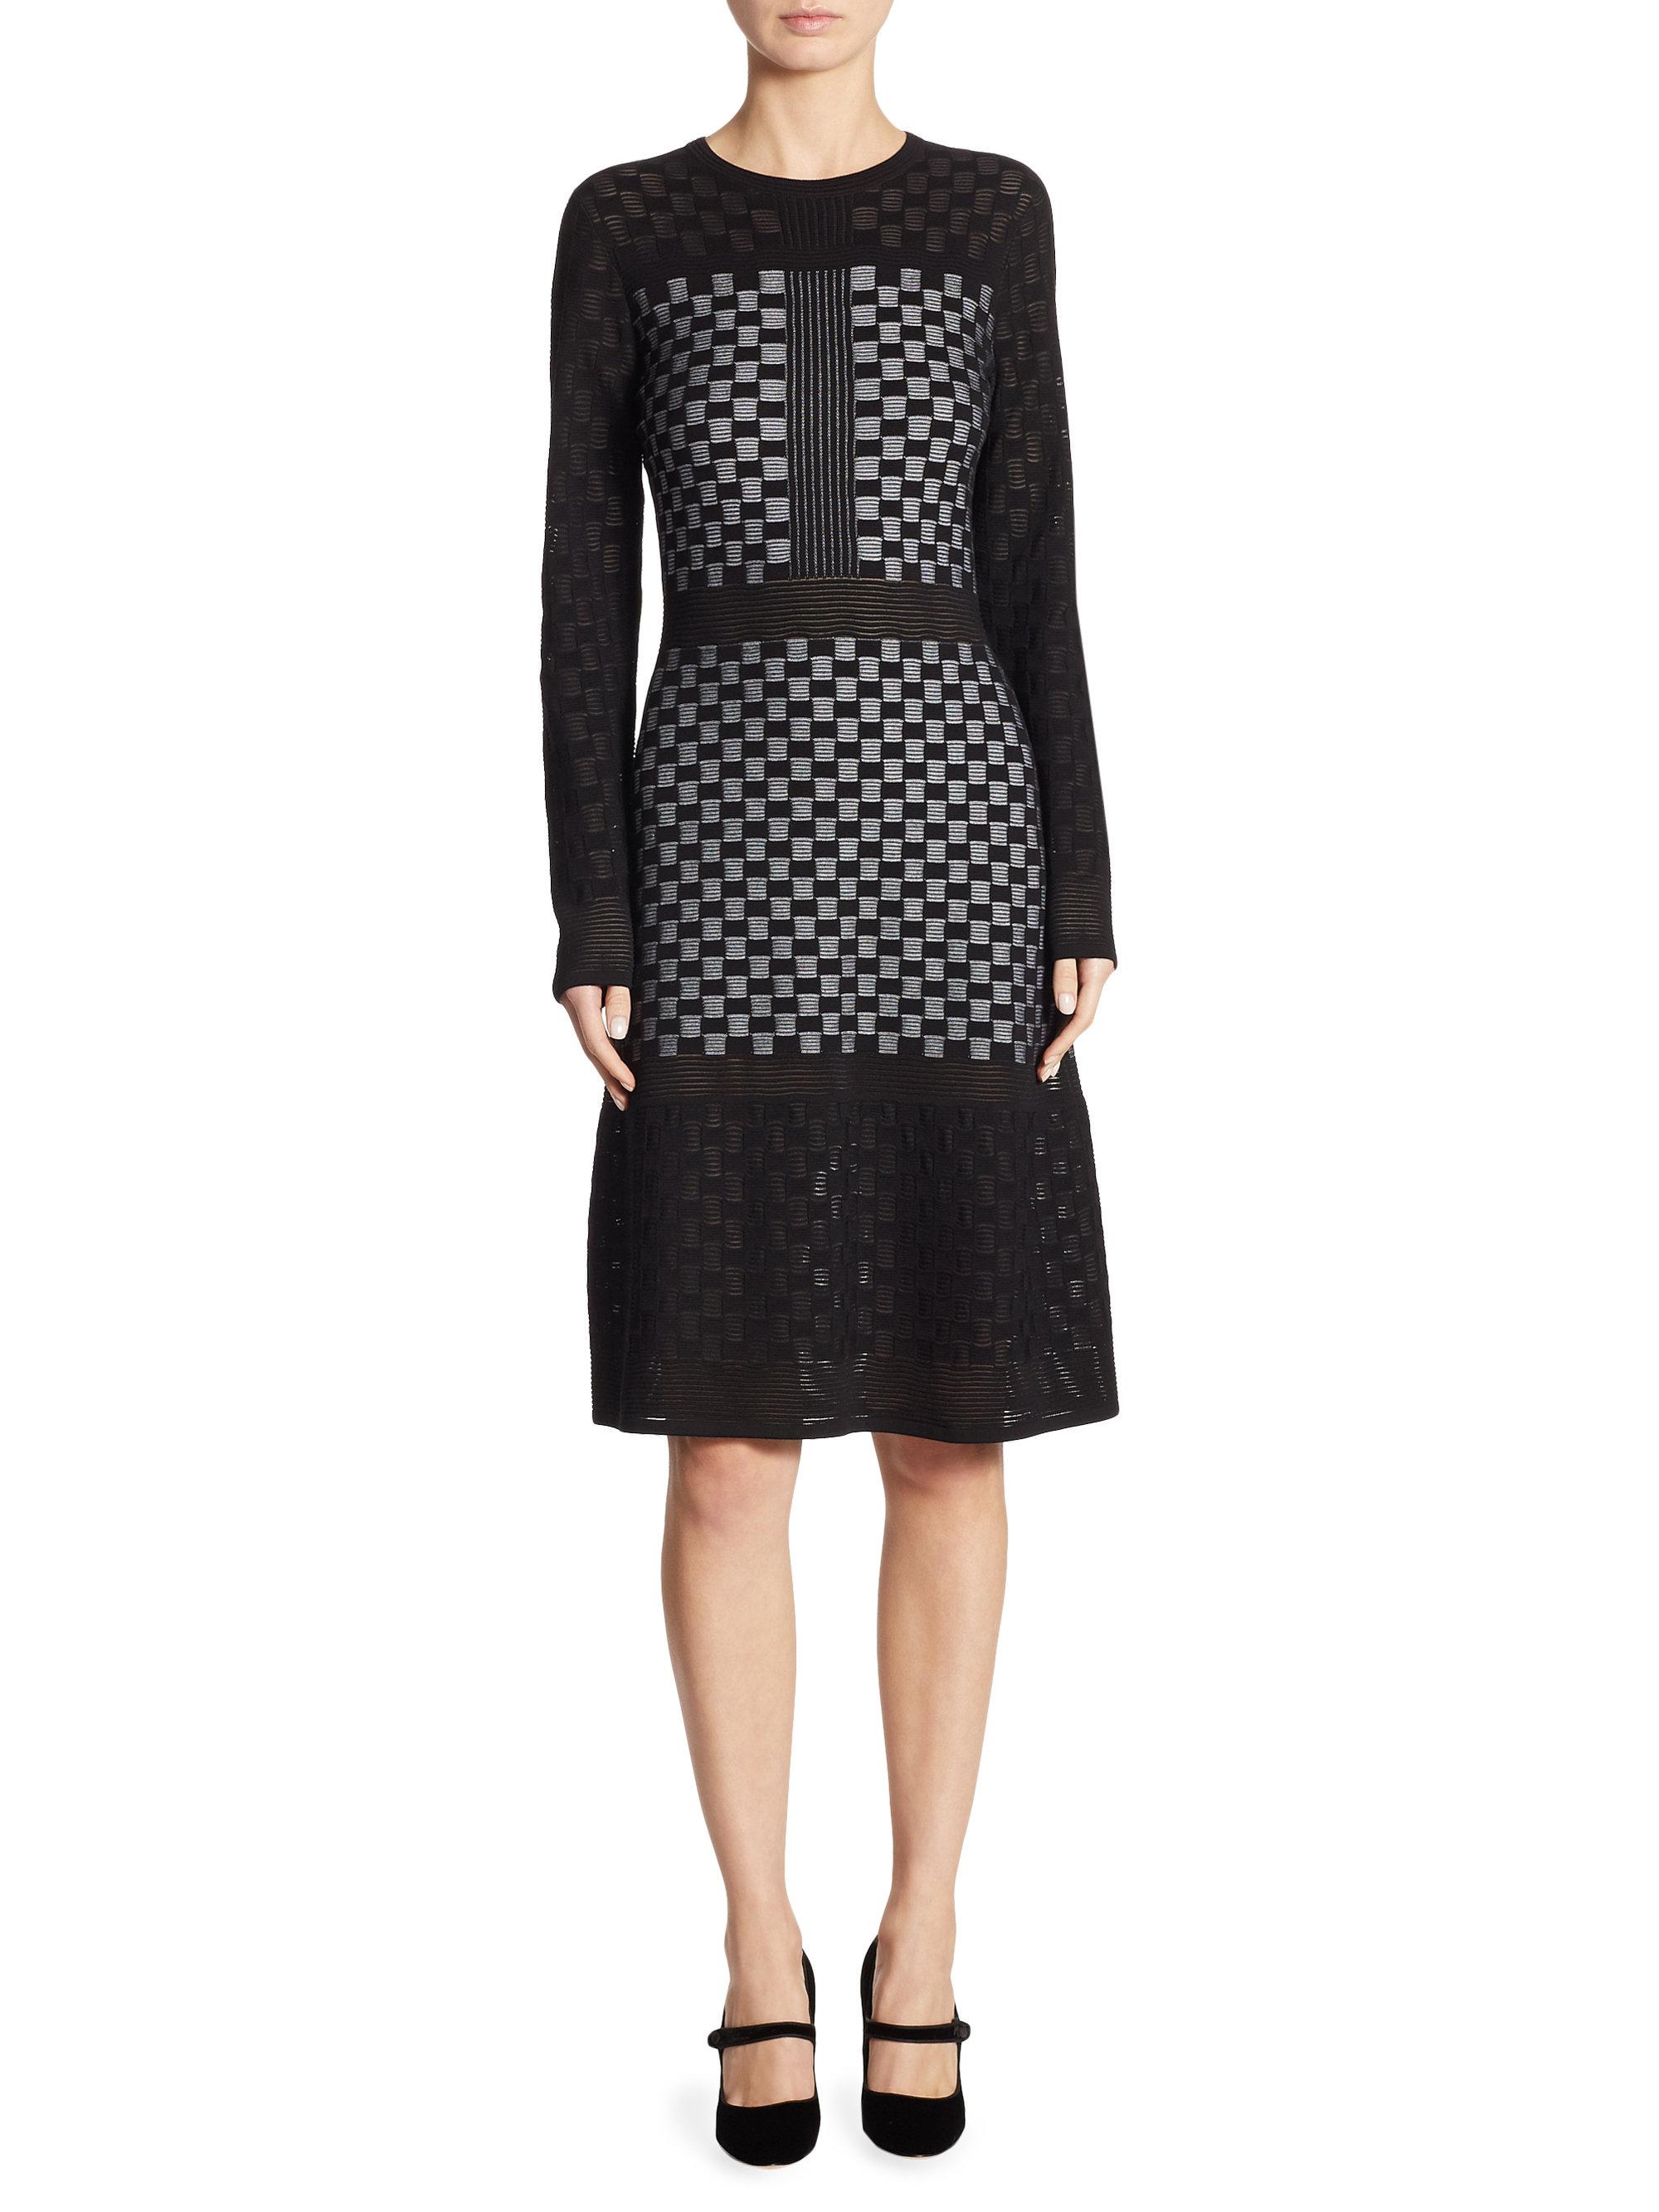 Lyst - St. John Checkerboard Illusion Dress in Black